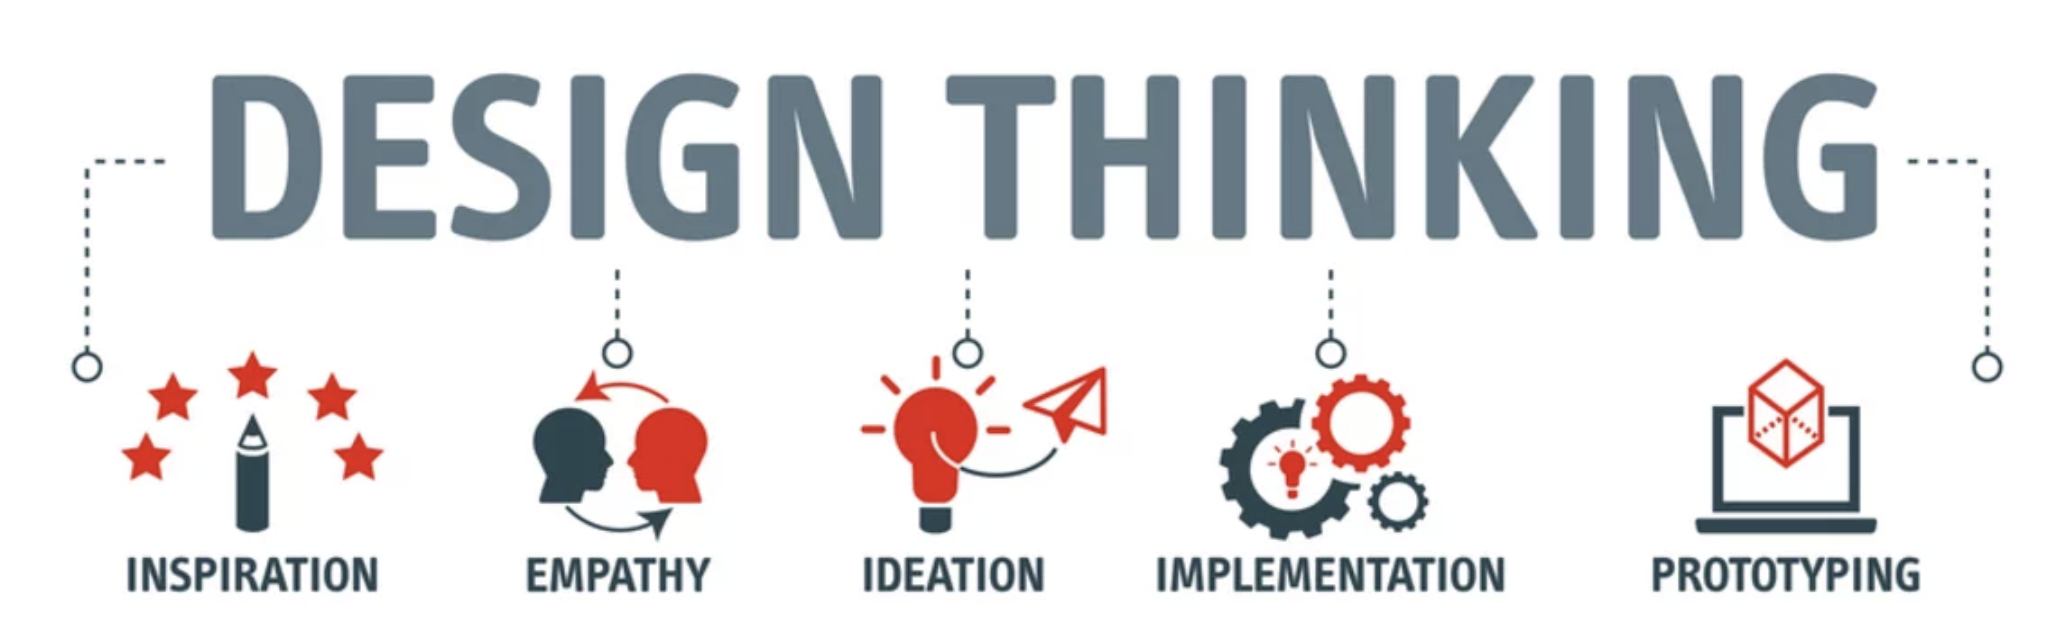 Design Thinking Model by Gestaldt